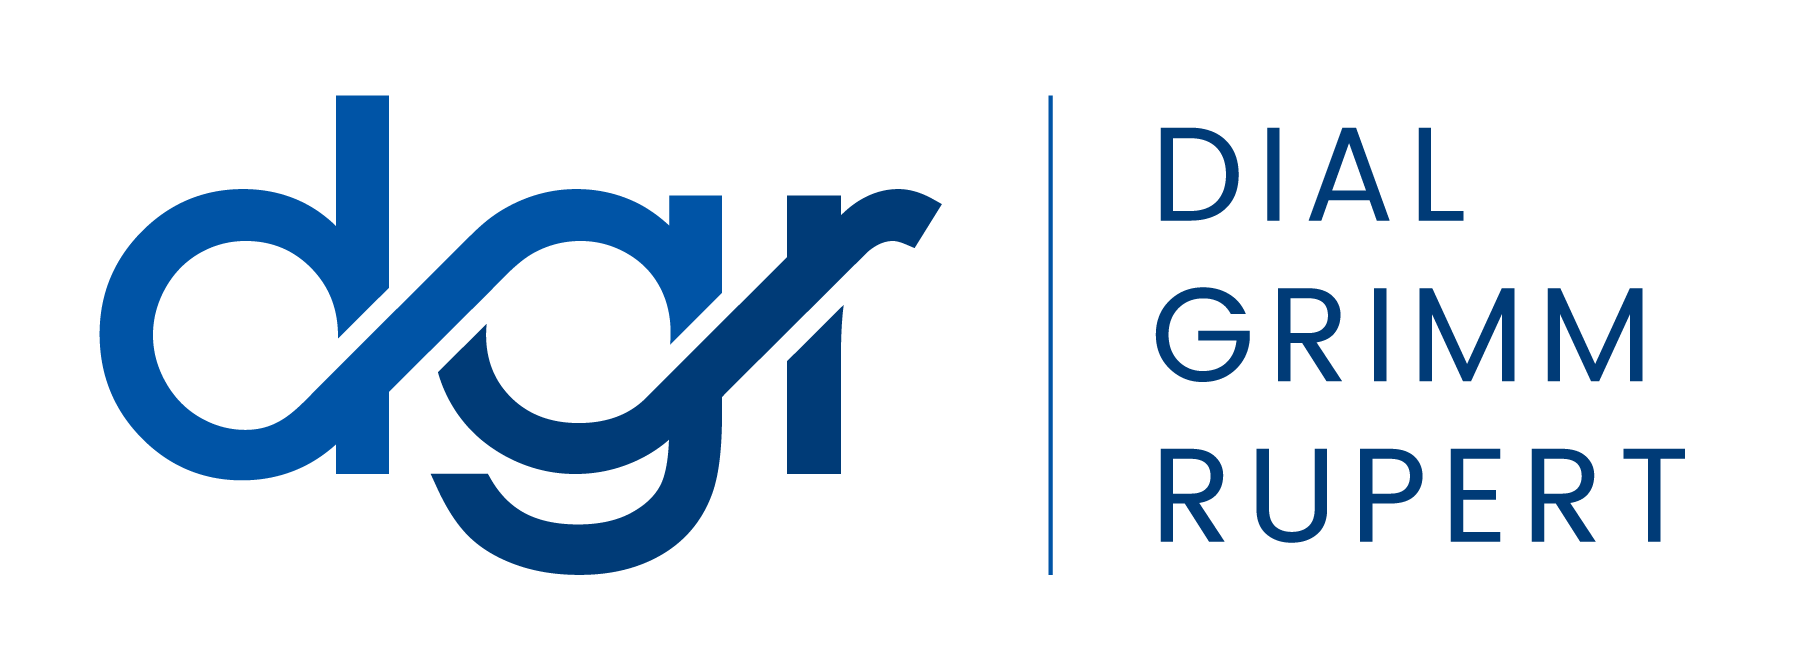 dgr-logo